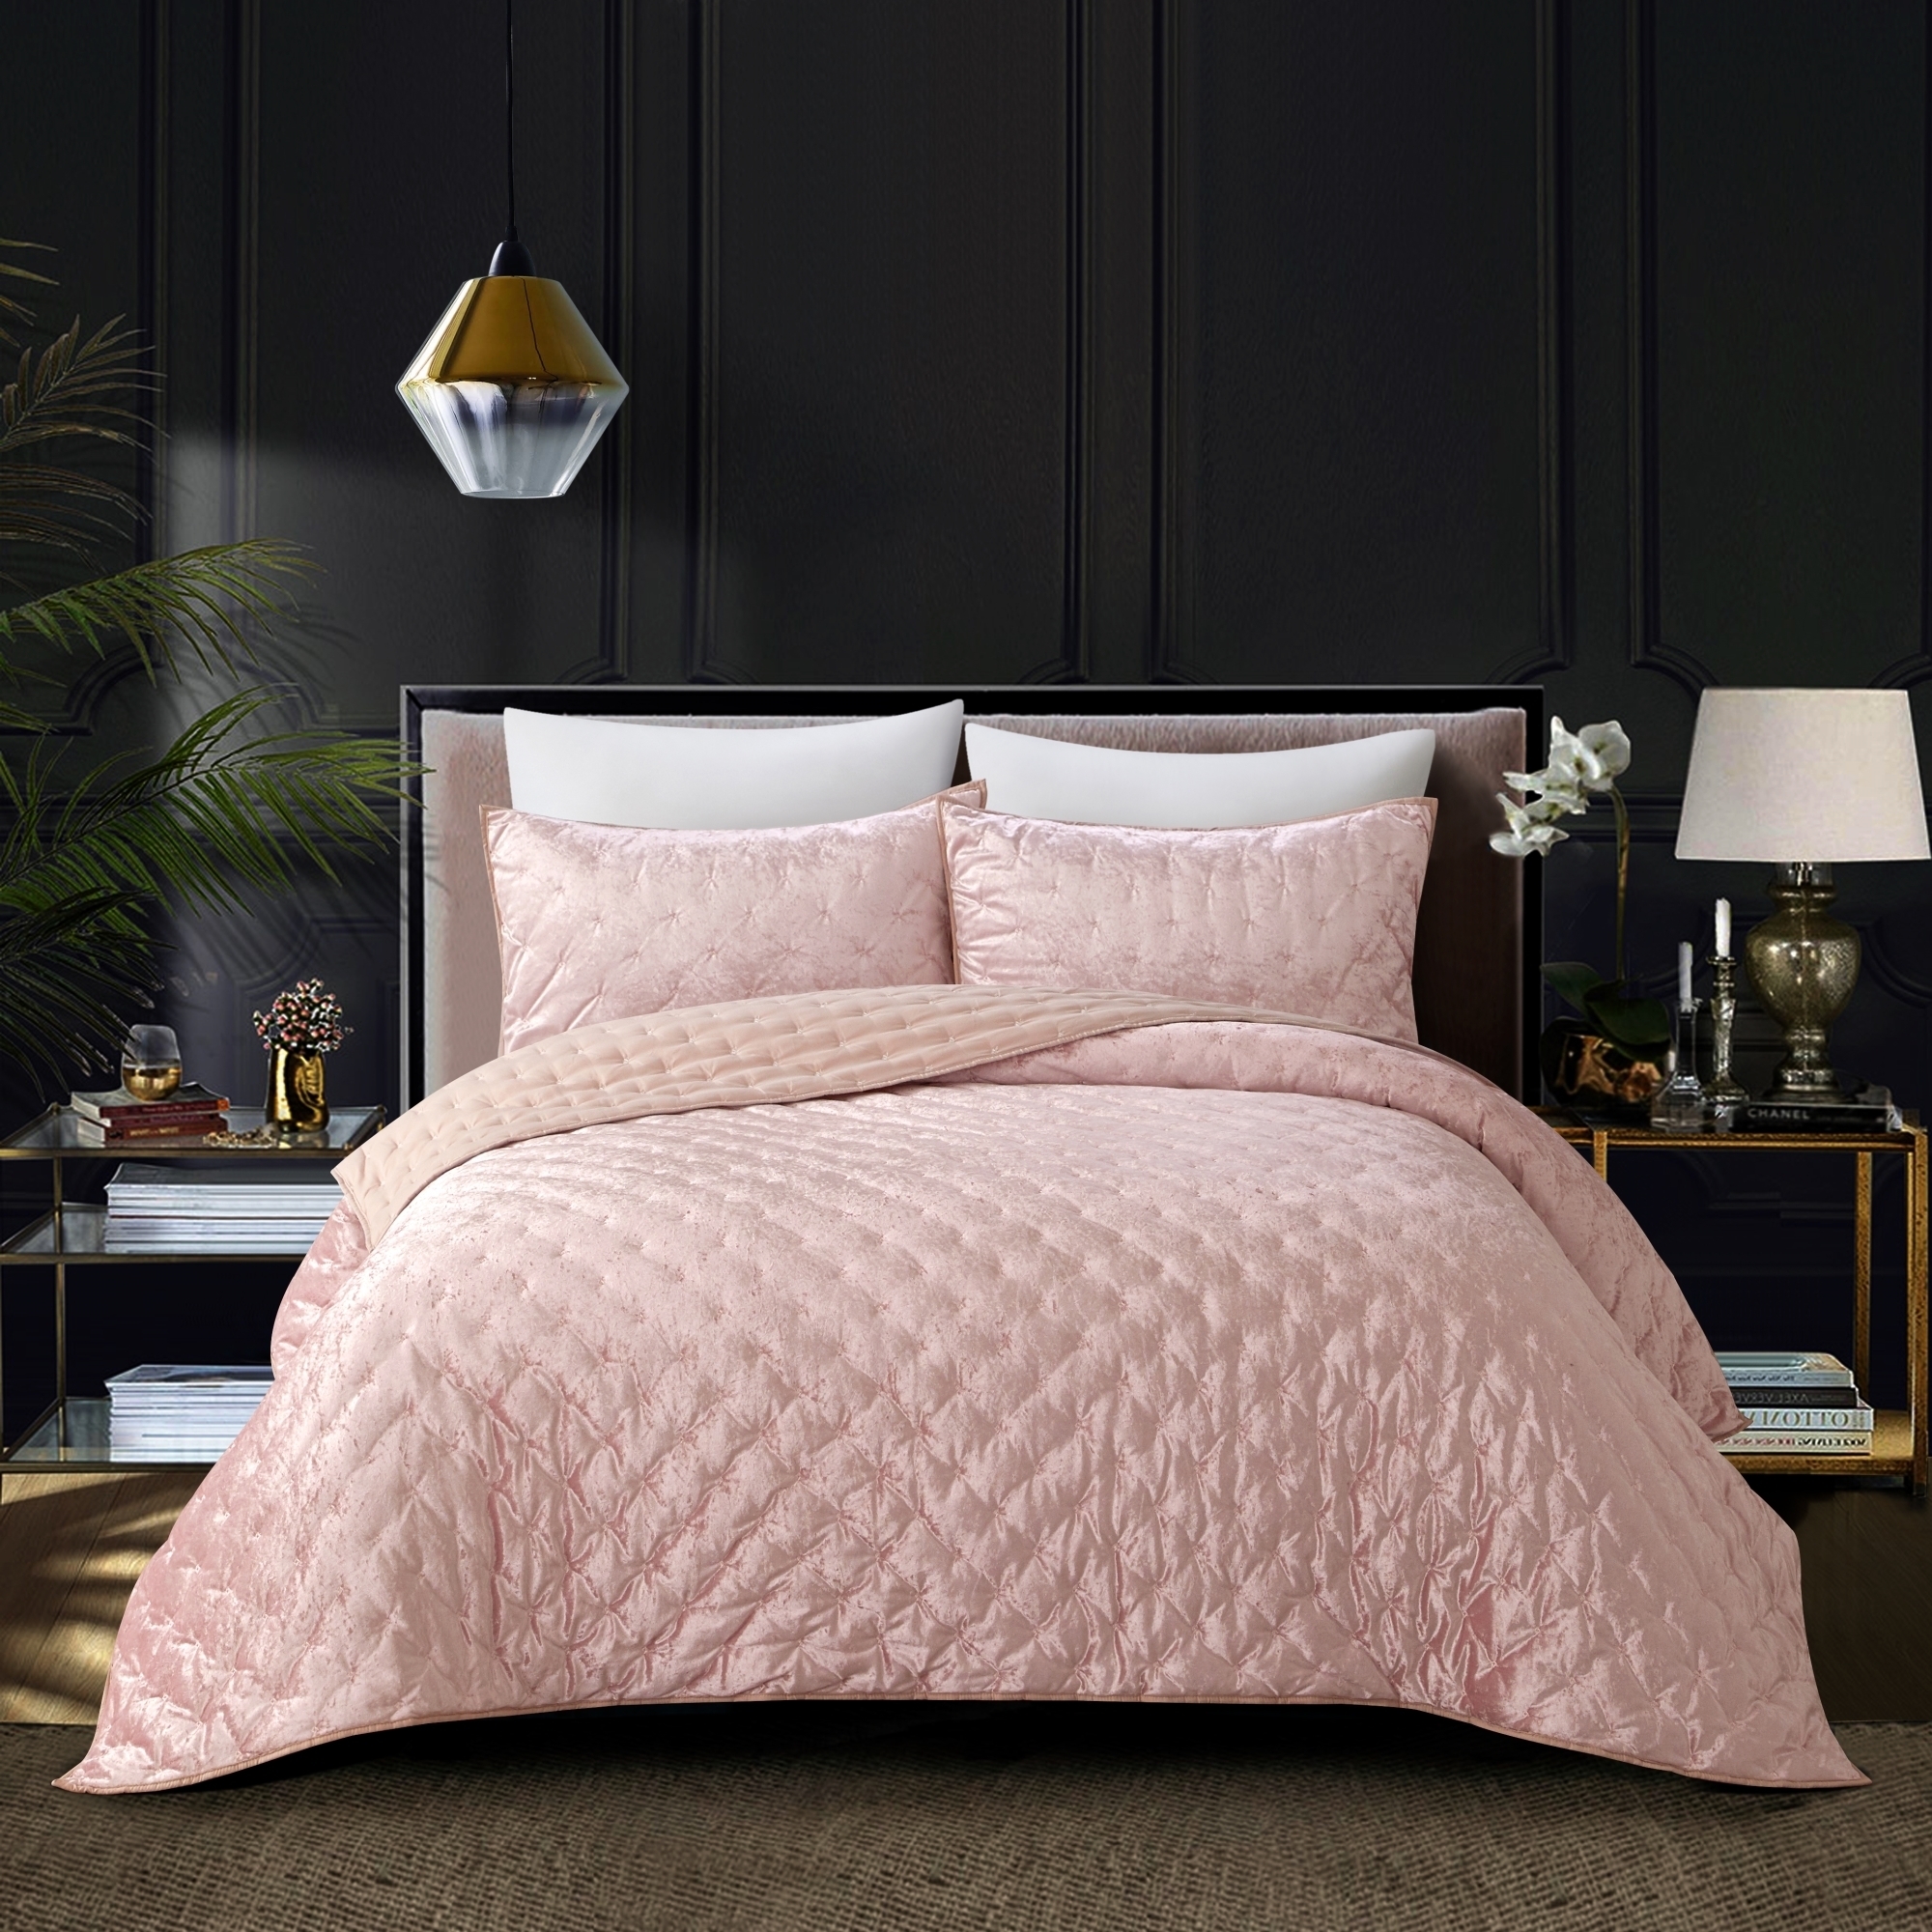 Meagan Comforter Set -Crushed Velvet , Soft And Shiny - Blush, Full/queen